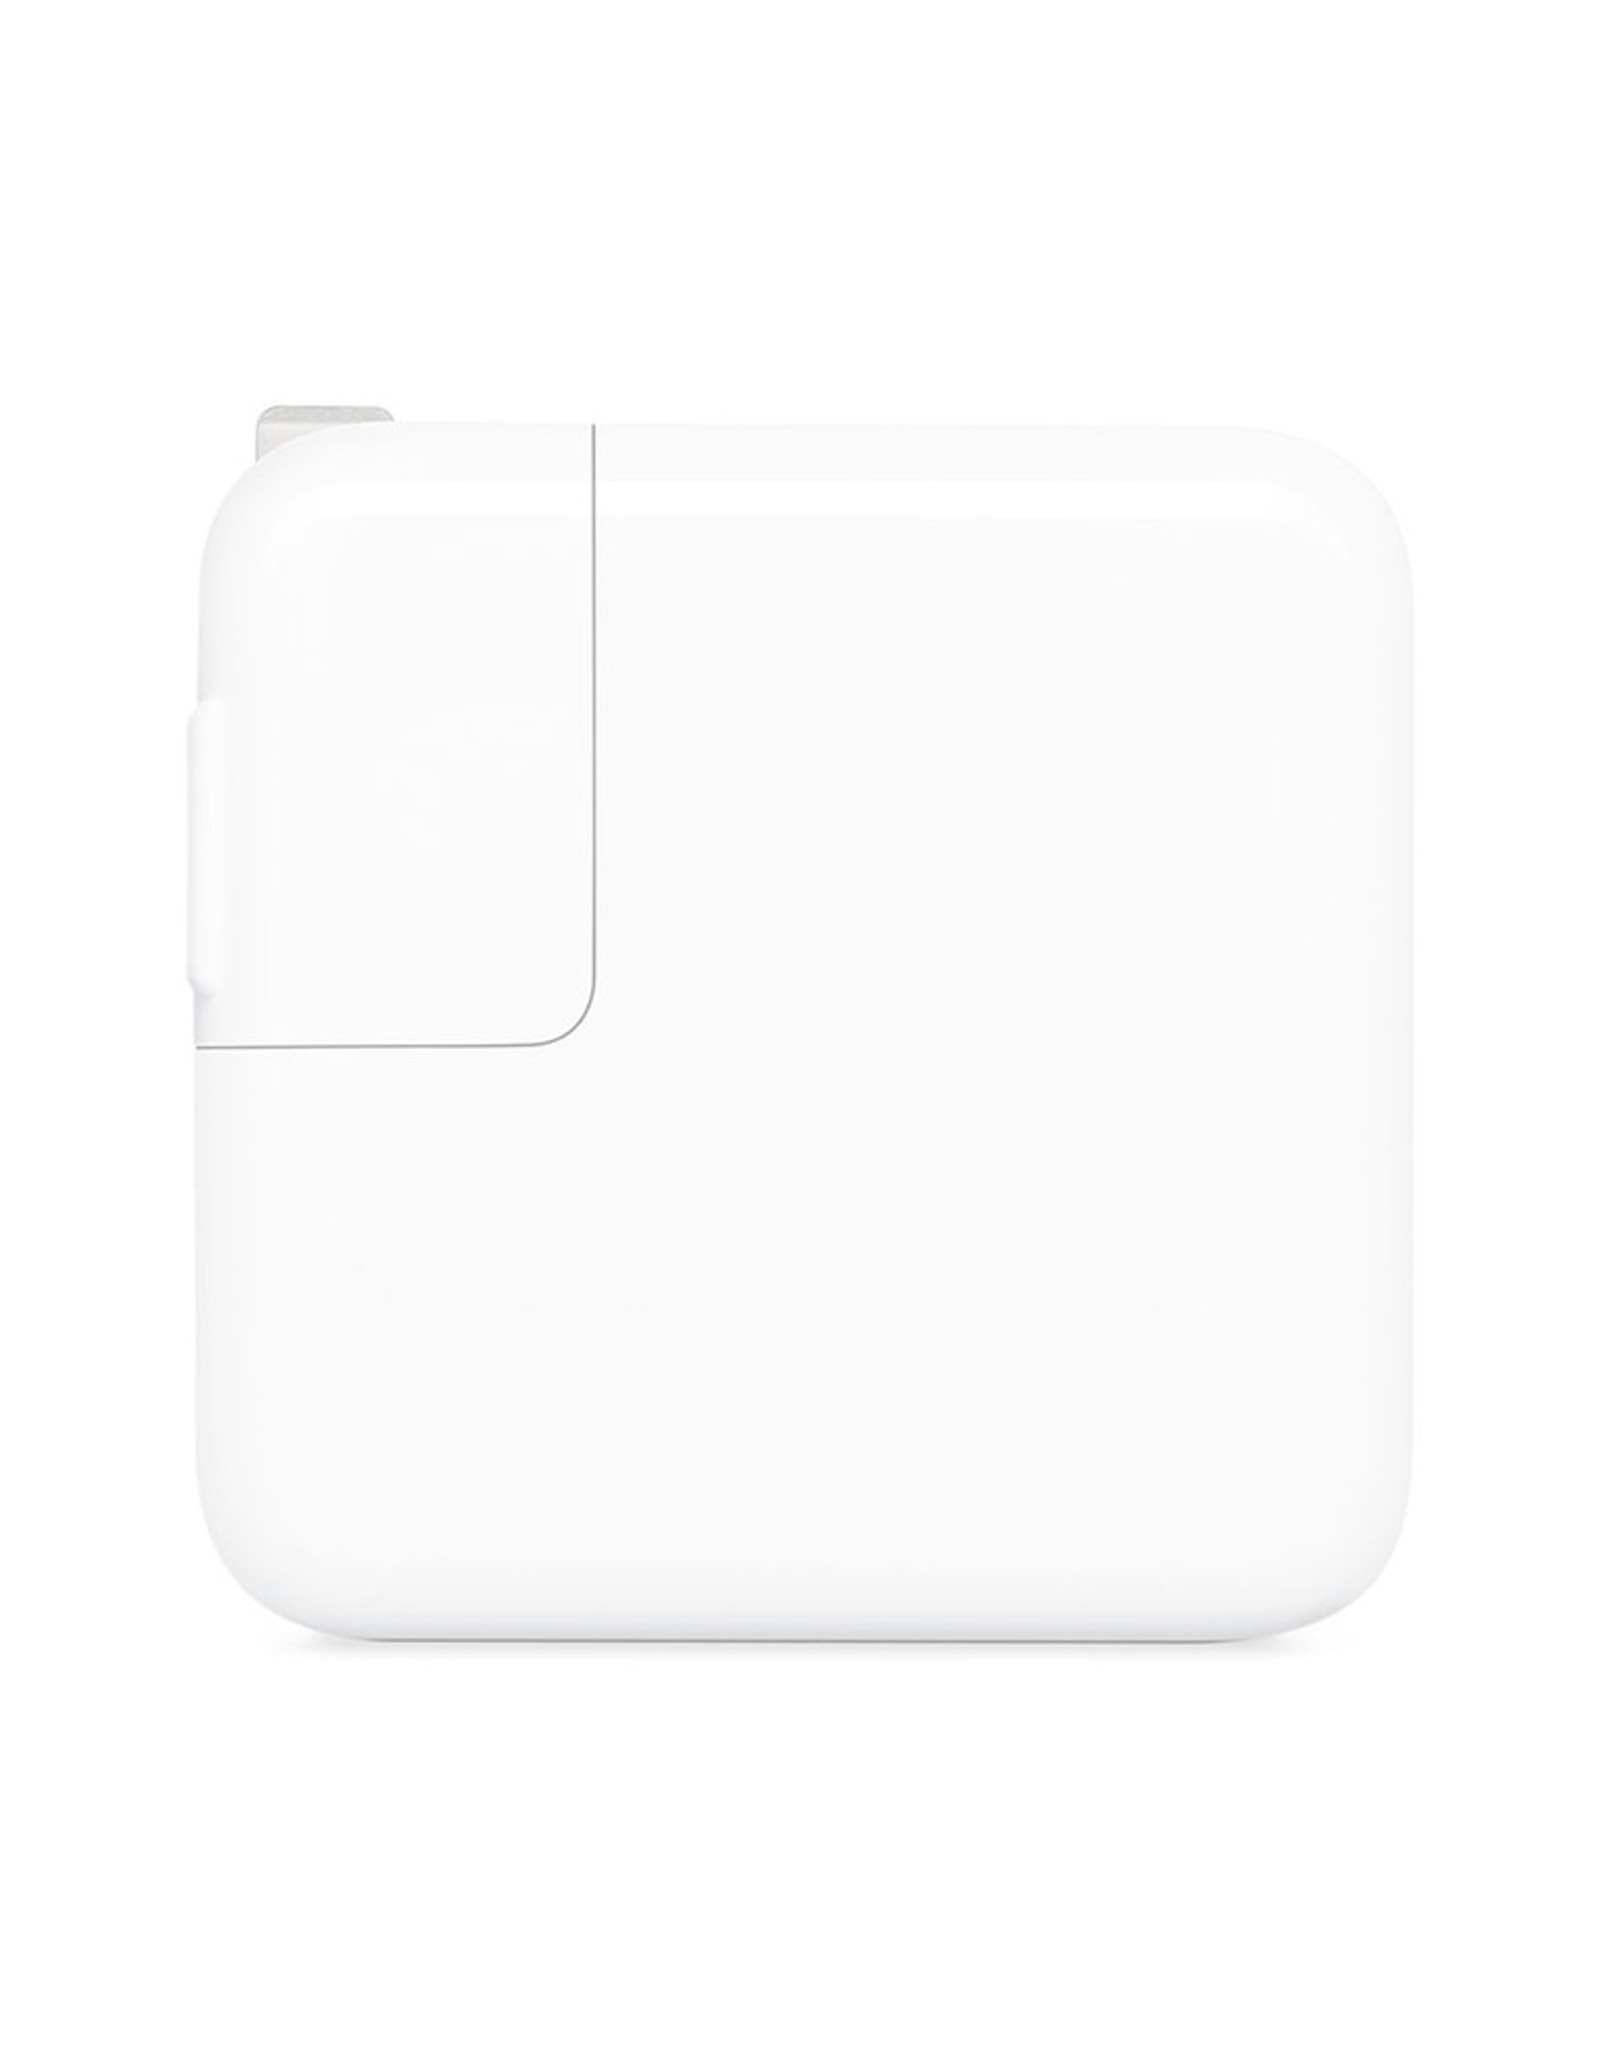 Apple 30W USB-C POWER ADAPTER (MACBOOK AND NEW MACBOOK AIR)